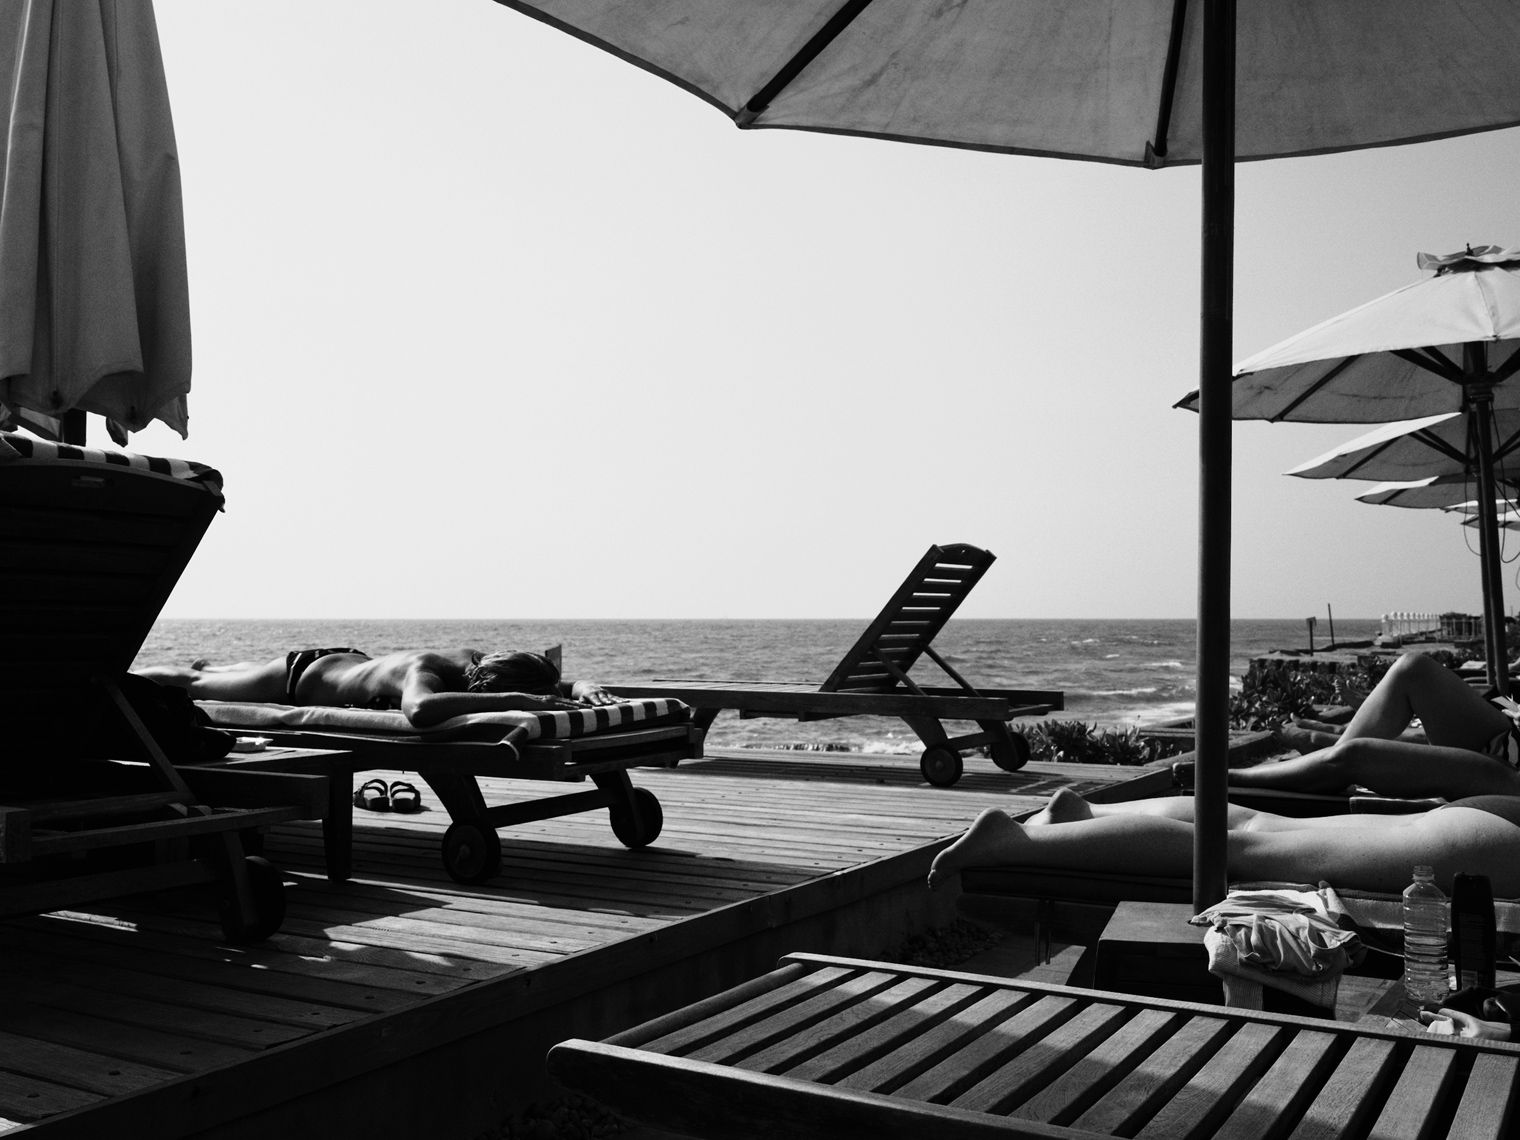 SRI LANKA, Asia, Colombo, people sunbathing at Galle Face hotel (B&W)